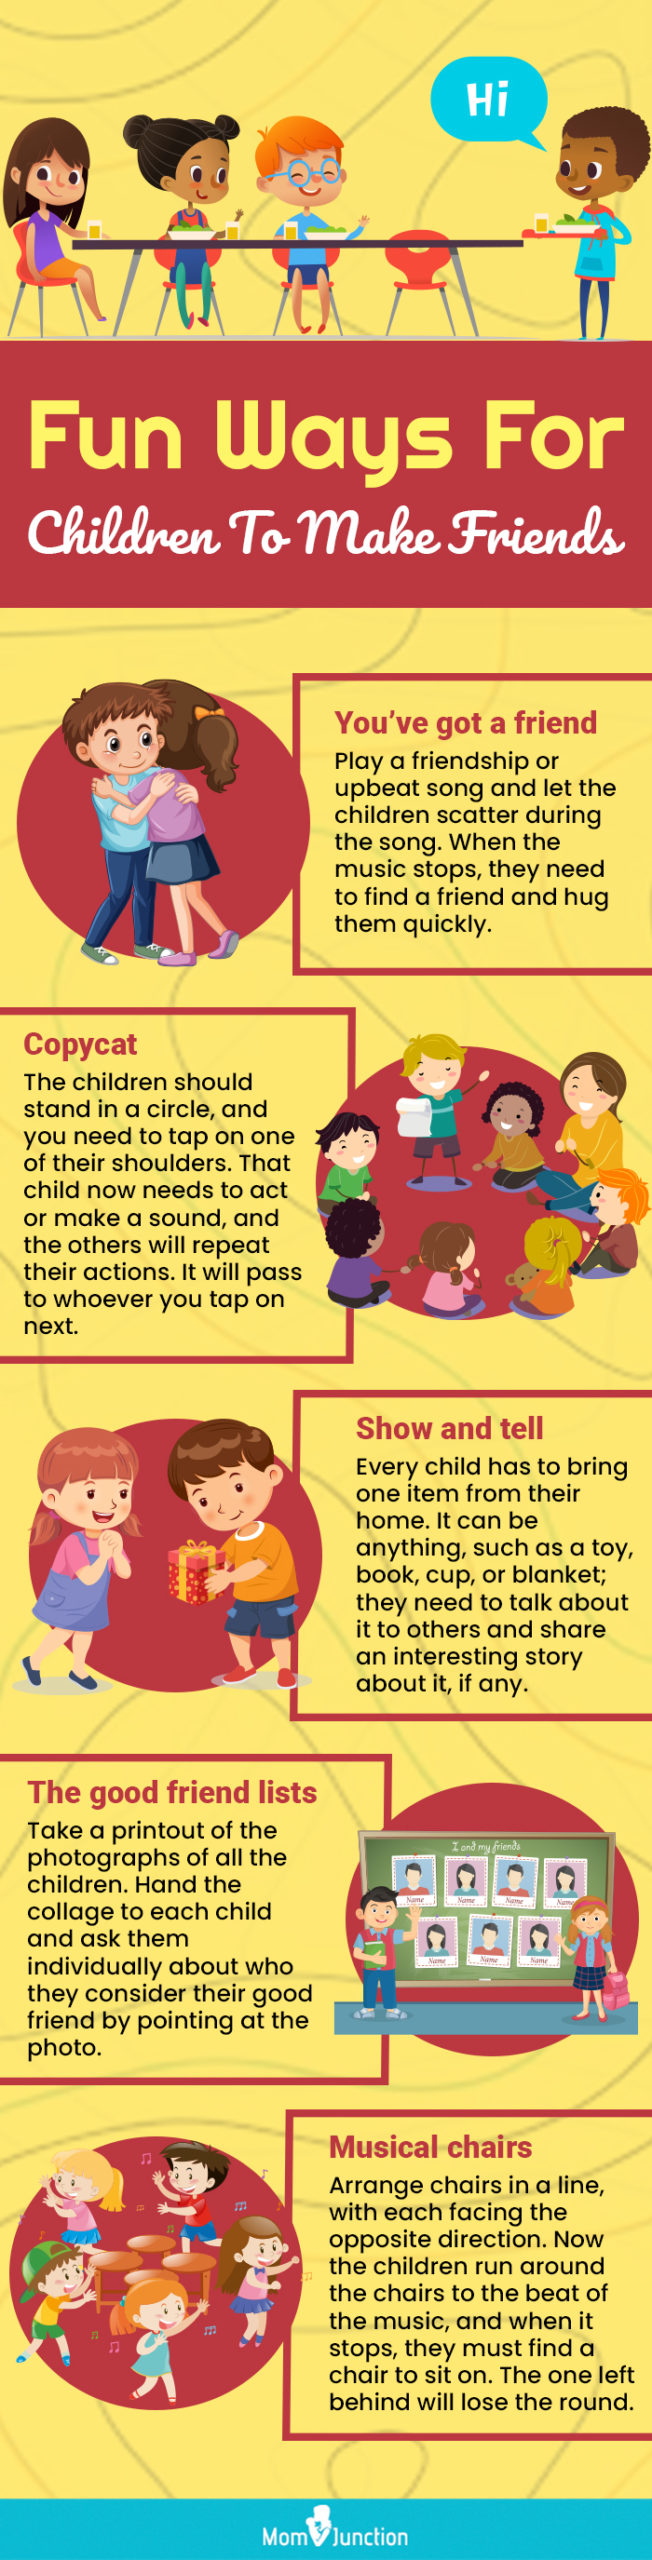 ways for children to make friends (infographic)